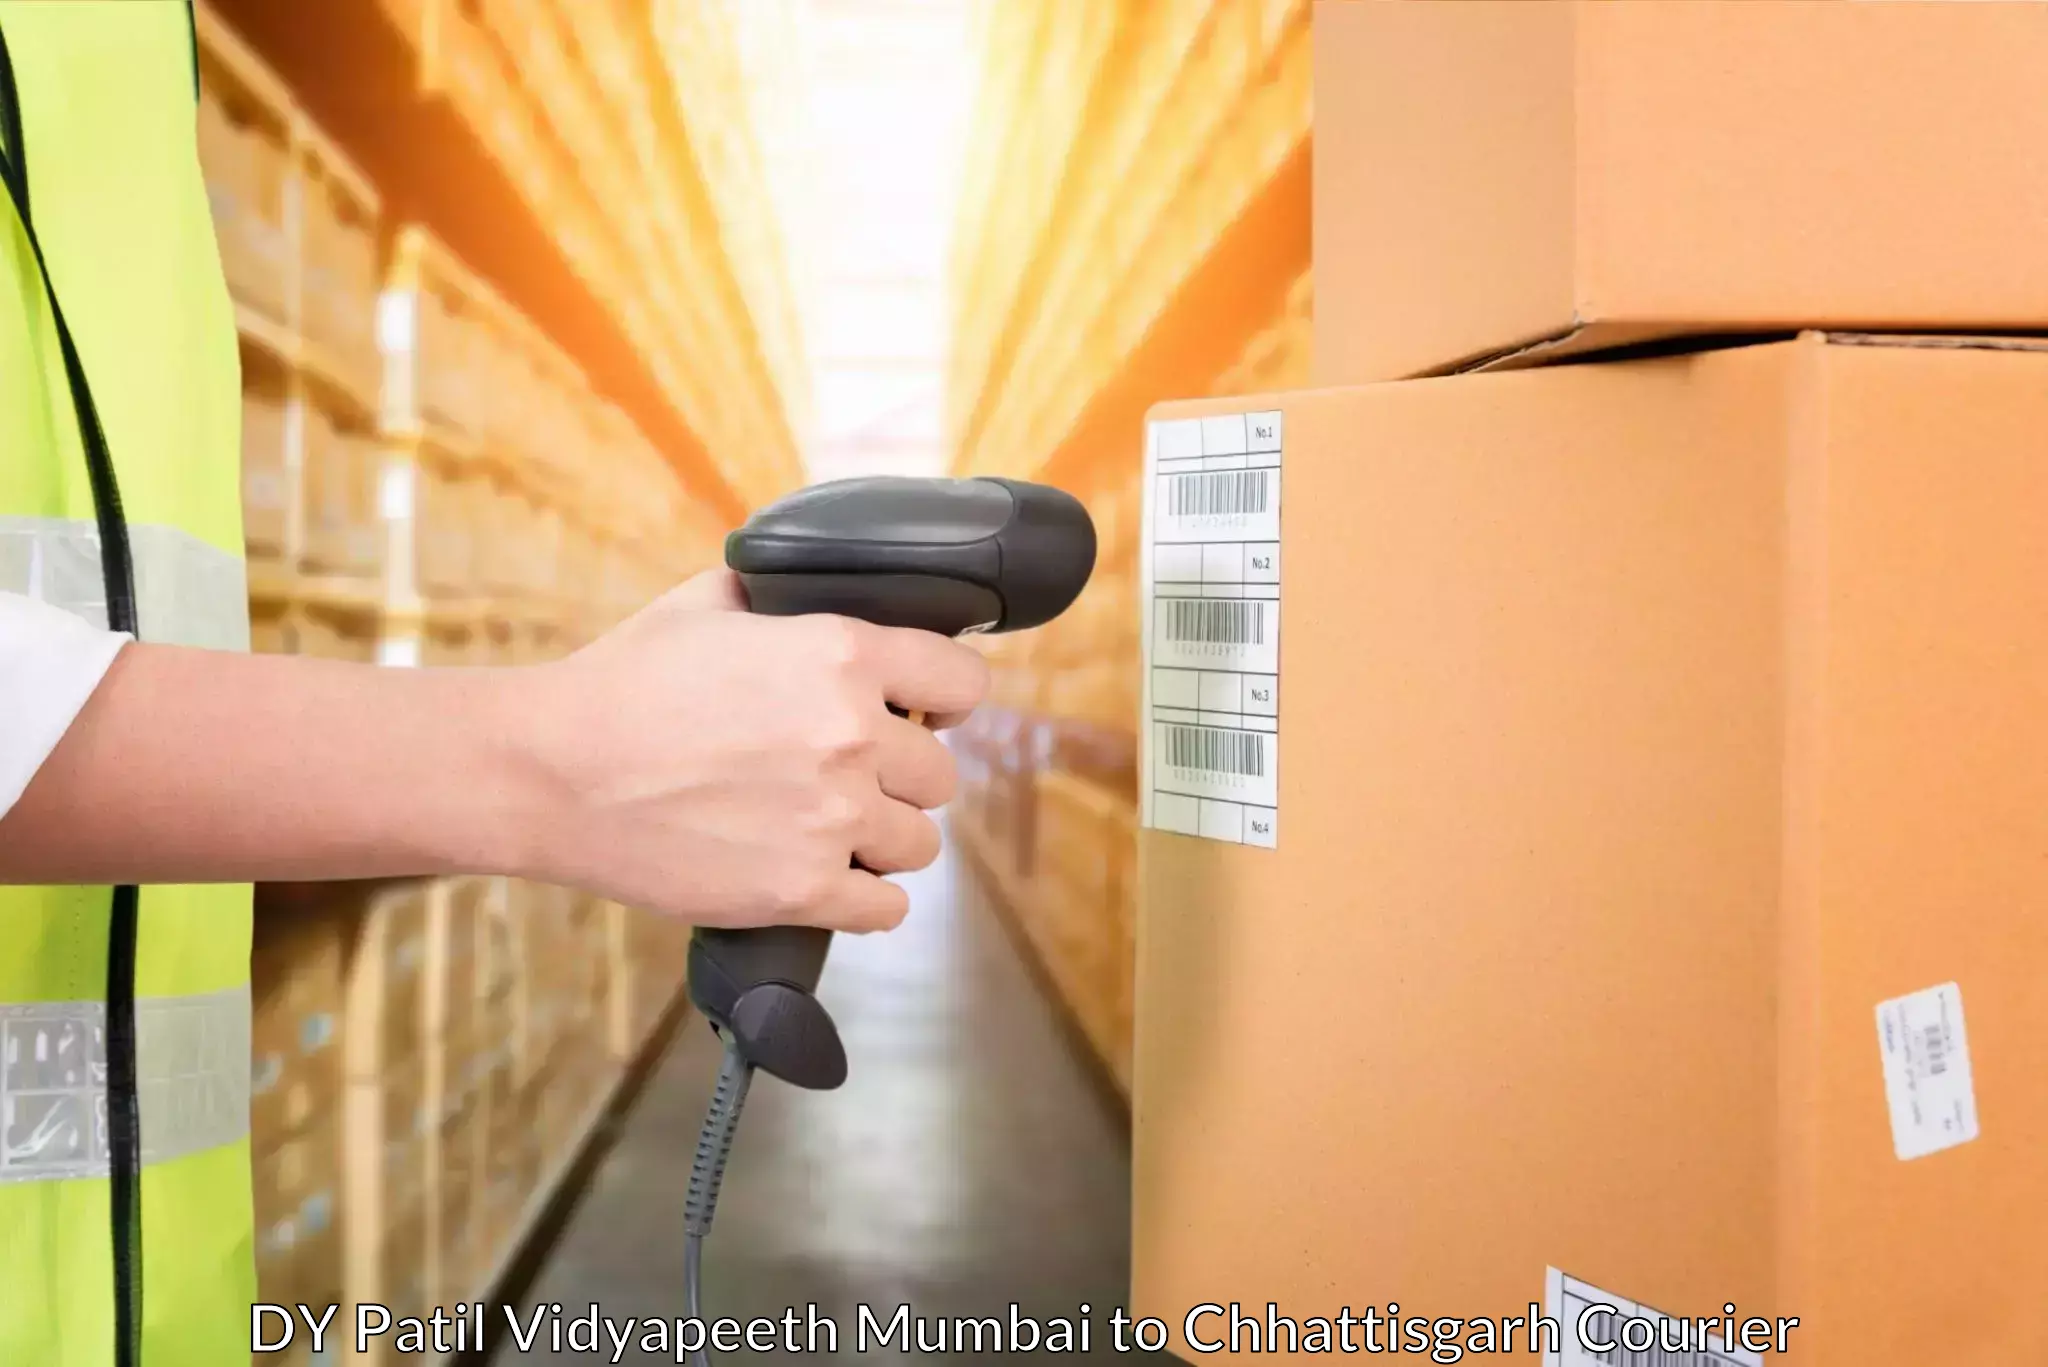 Urgent courier needs in DY Patil Vidyapeeth Mumbai to Pandariya